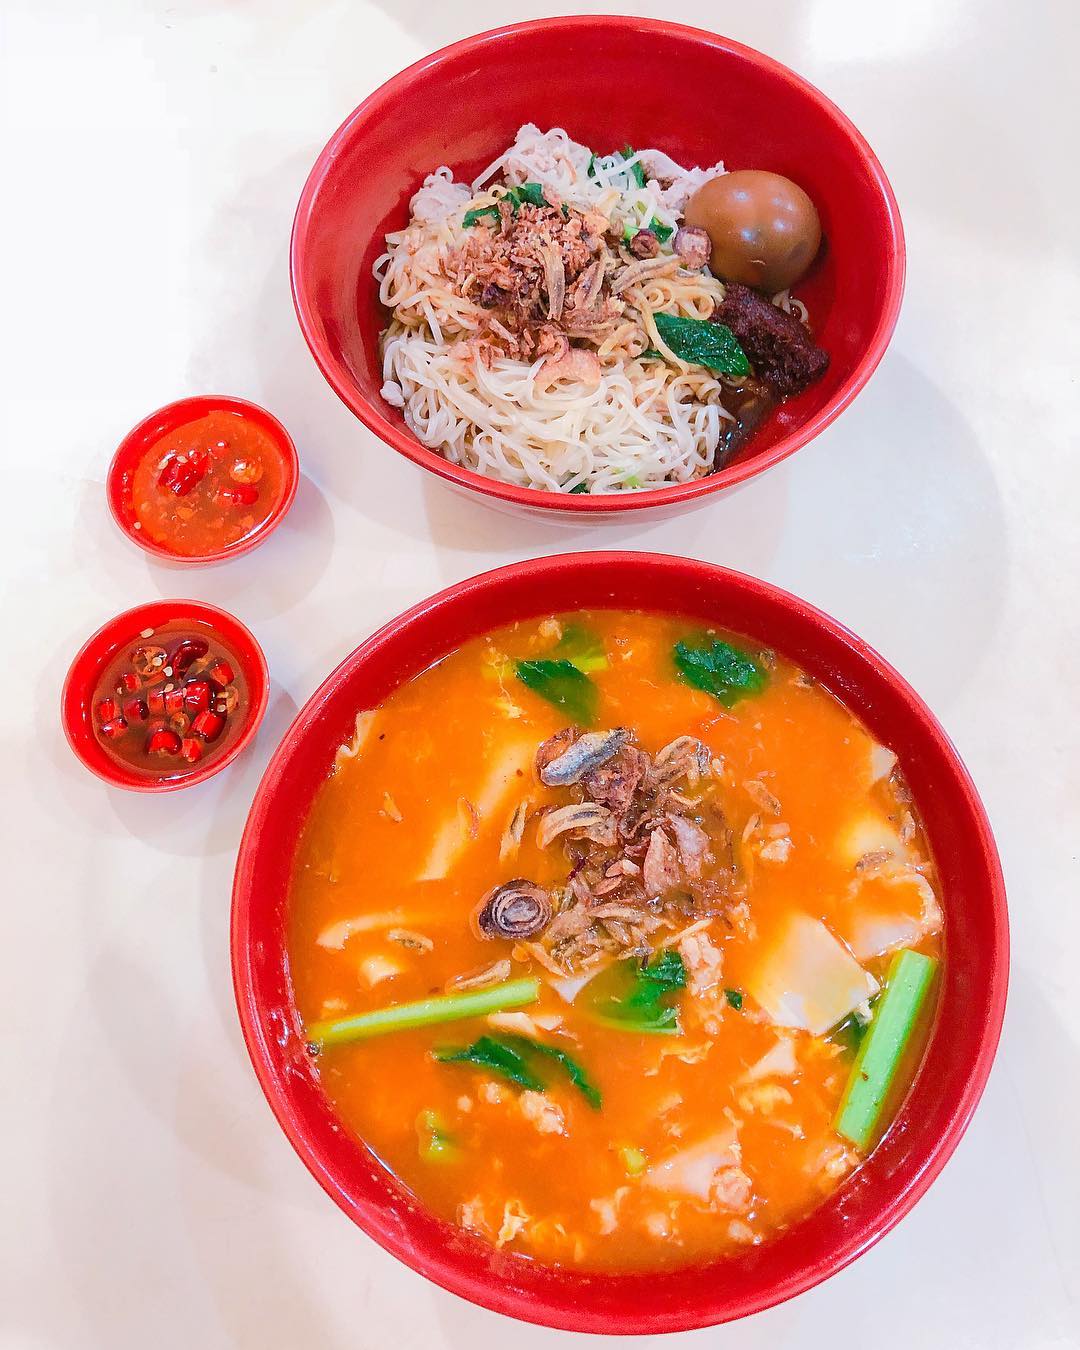 Bukit Batok Food - Ban Mian Fish Soup